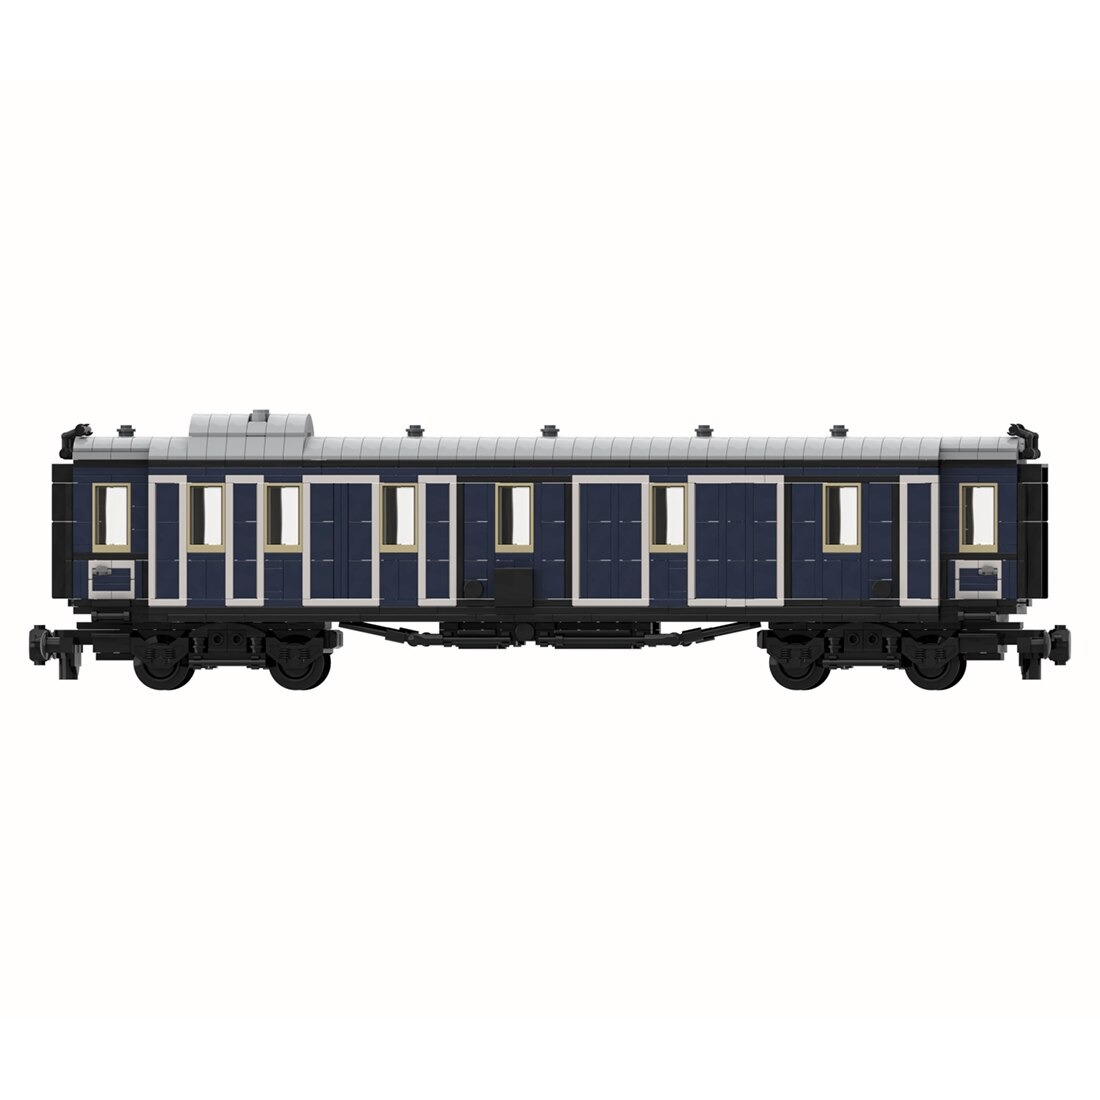 moc 130785 bavarian express train baggag main 1 - DECOOL